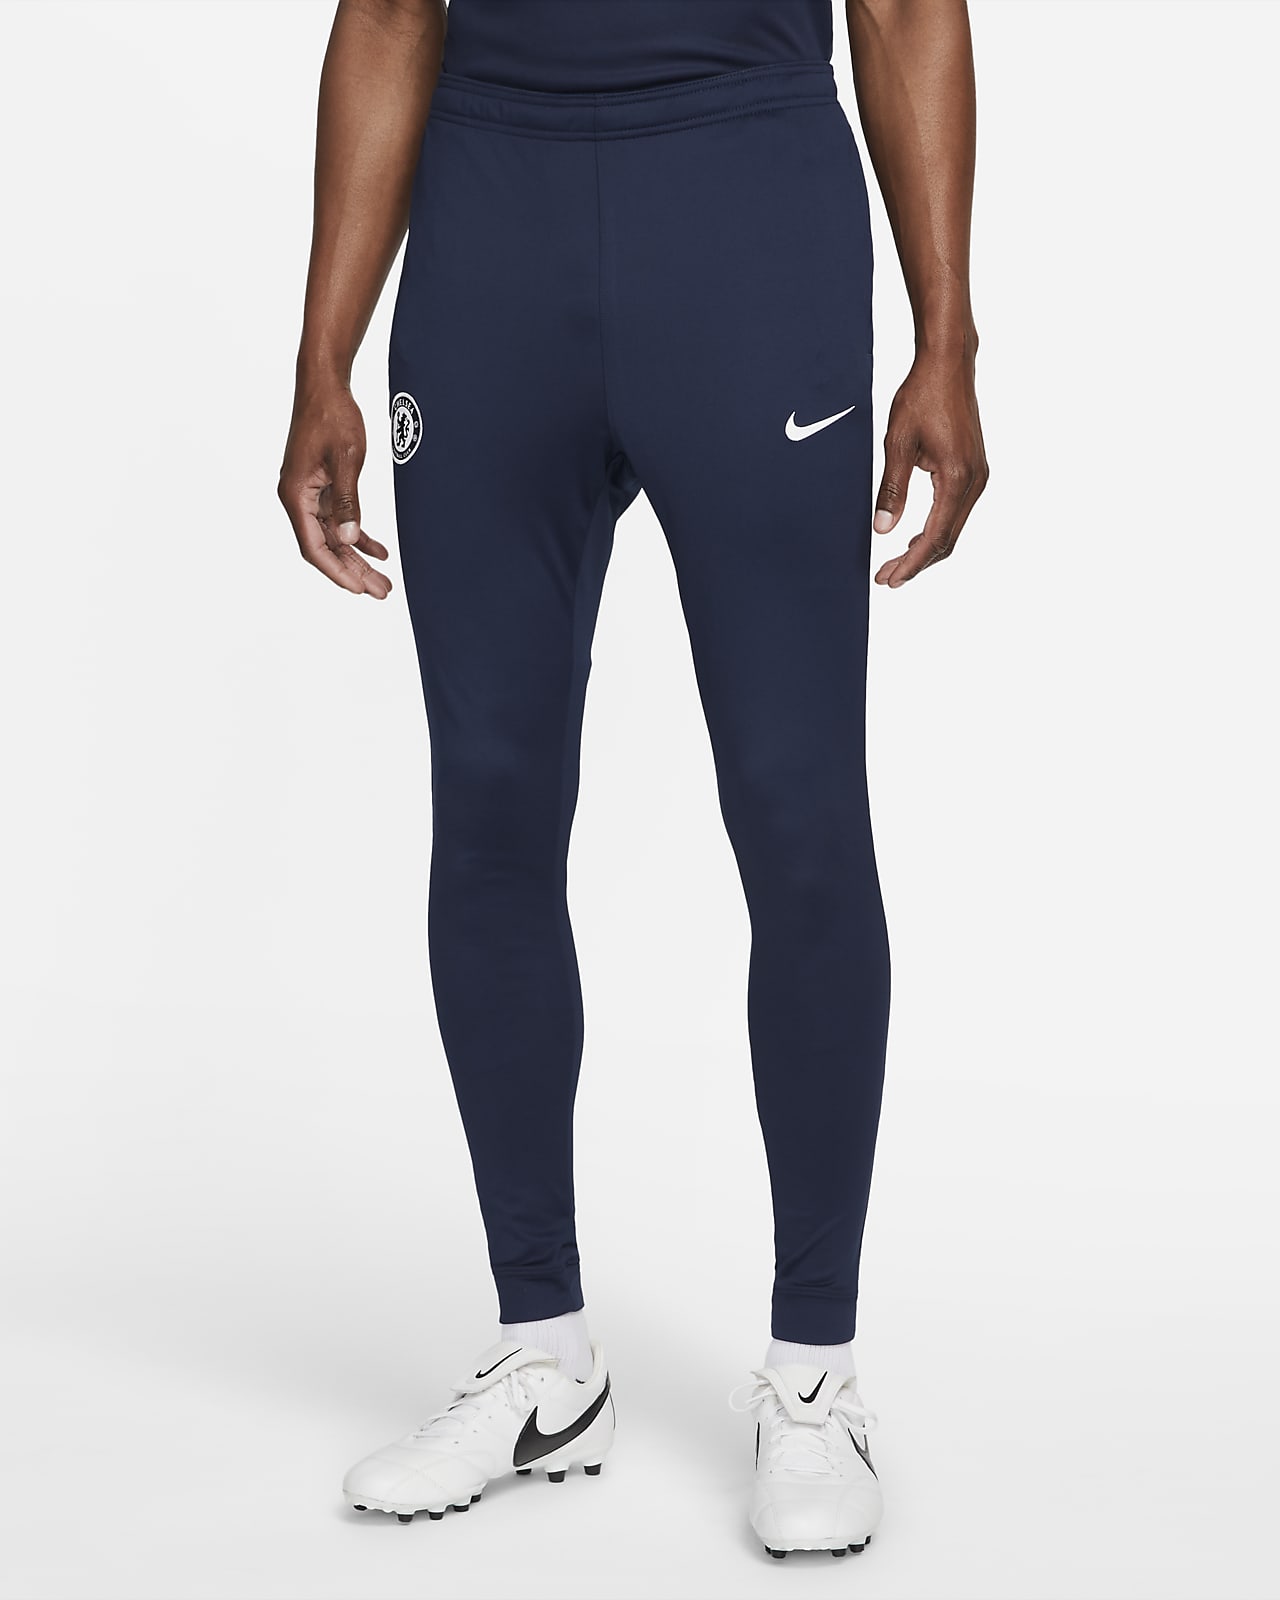 Chelsea F.C. Strike Men's Nike Dri-FIT Knit Football Tracksuit Bottoms